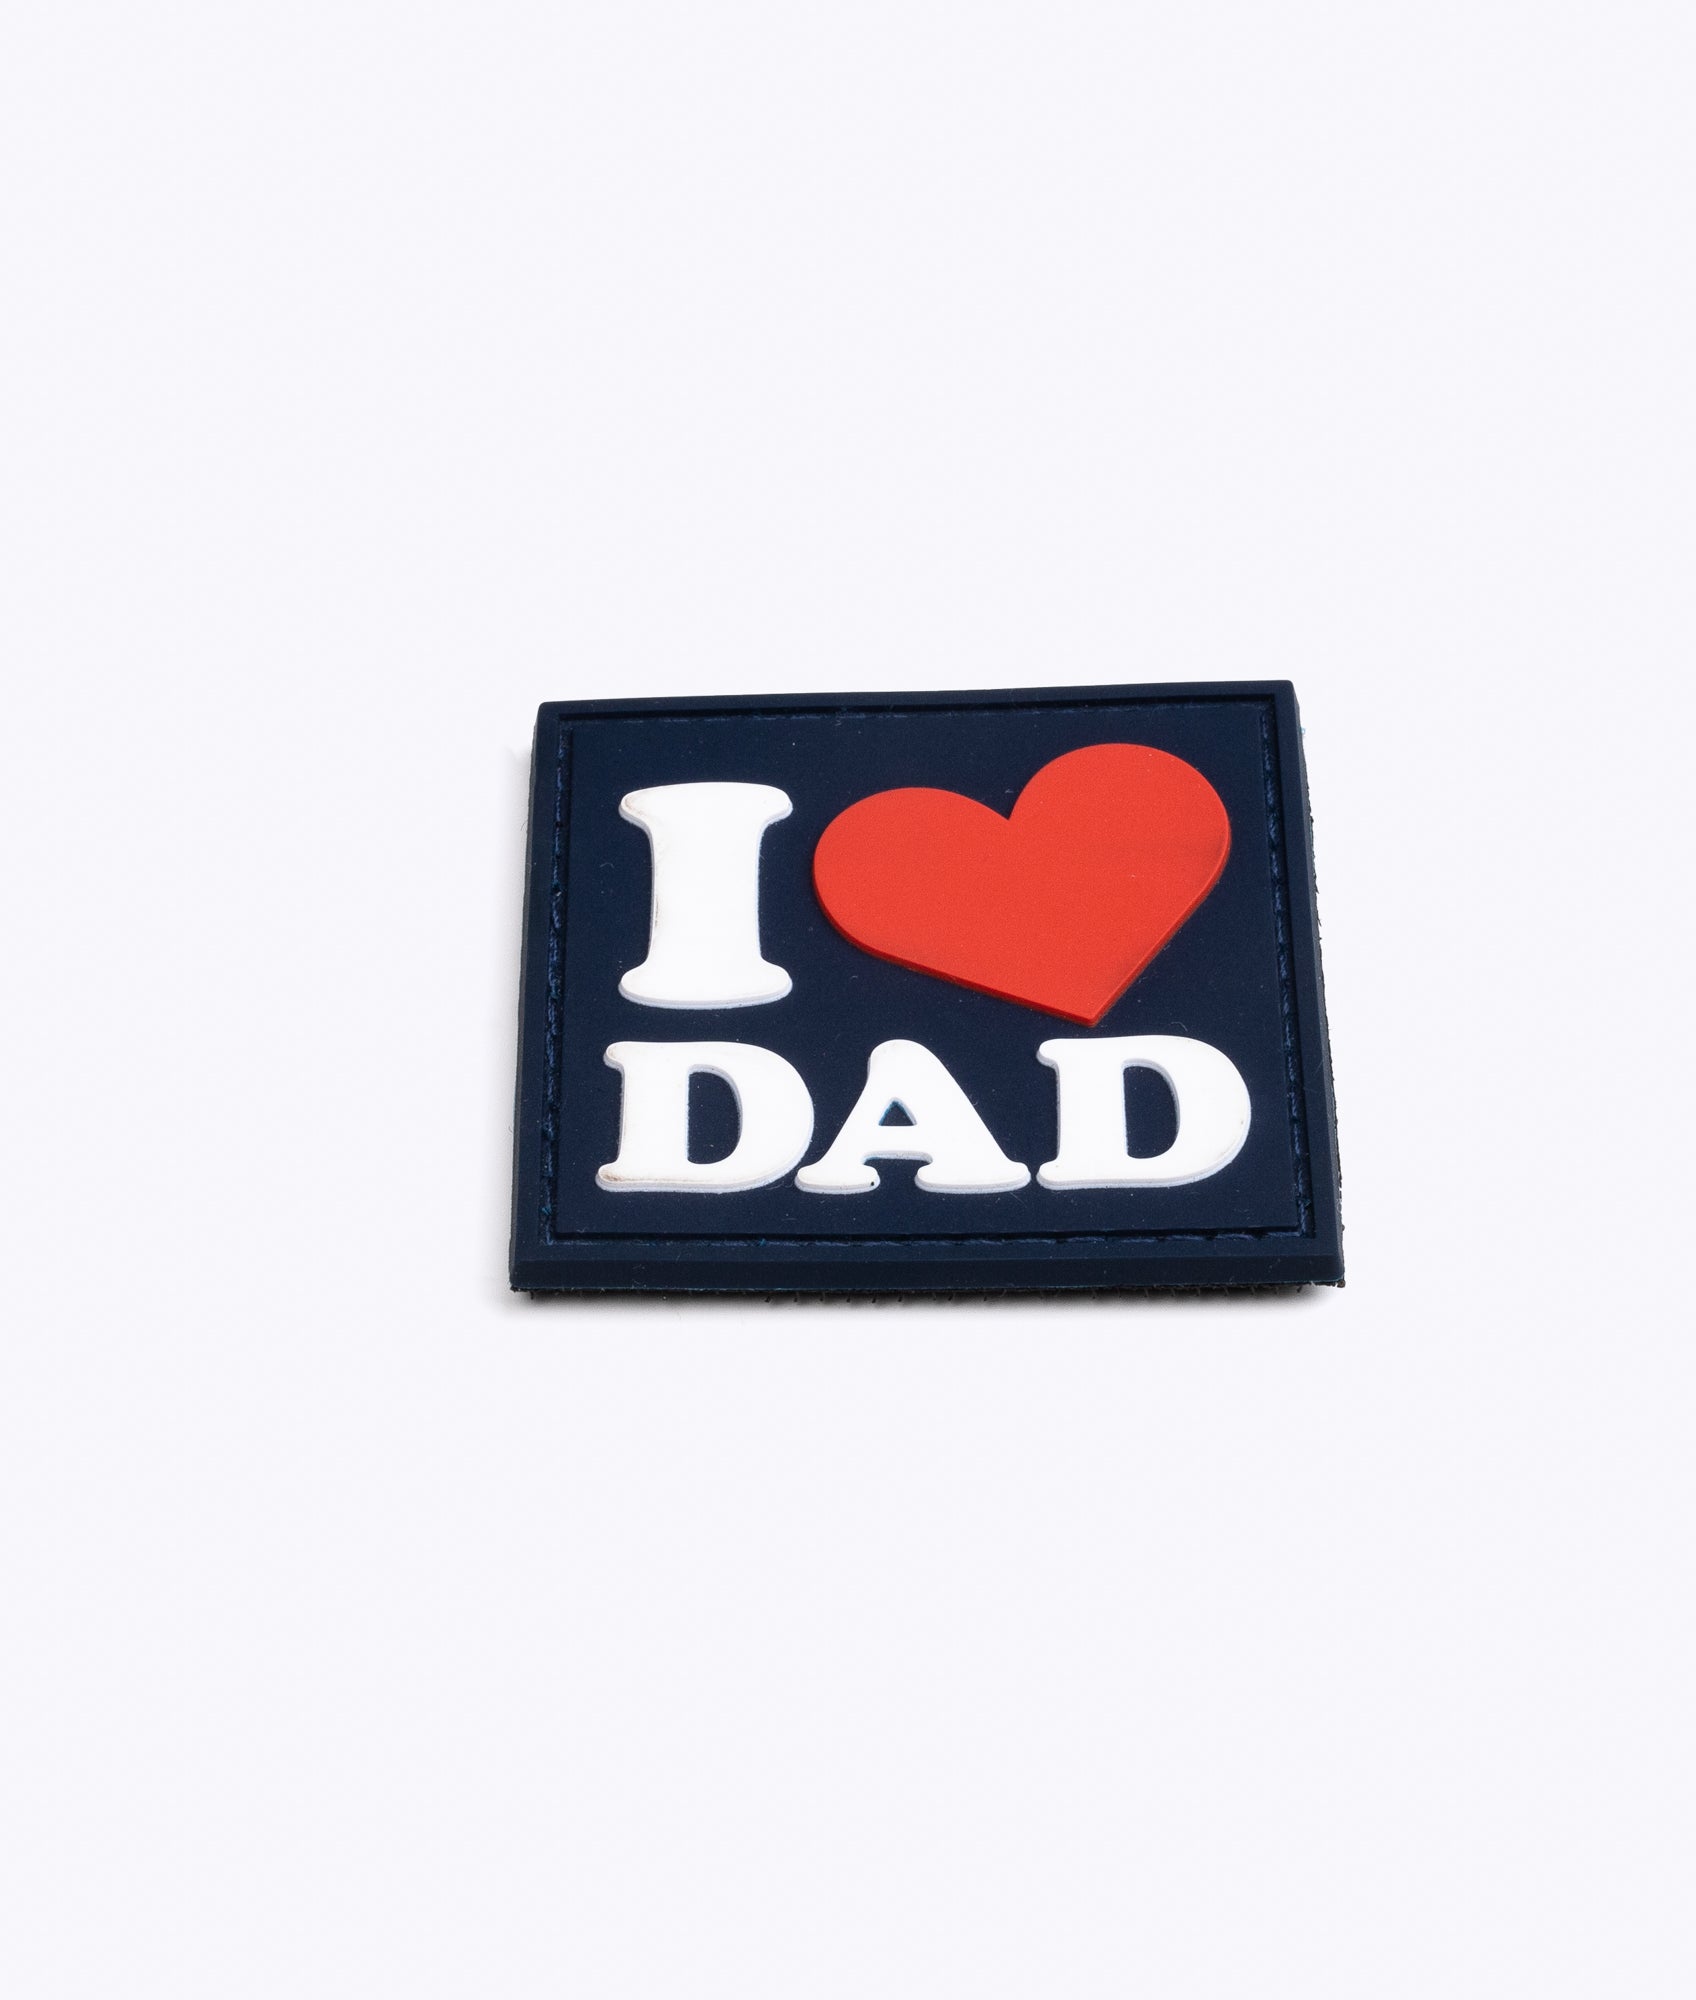 'I ❤️ DAD' PVC Patch